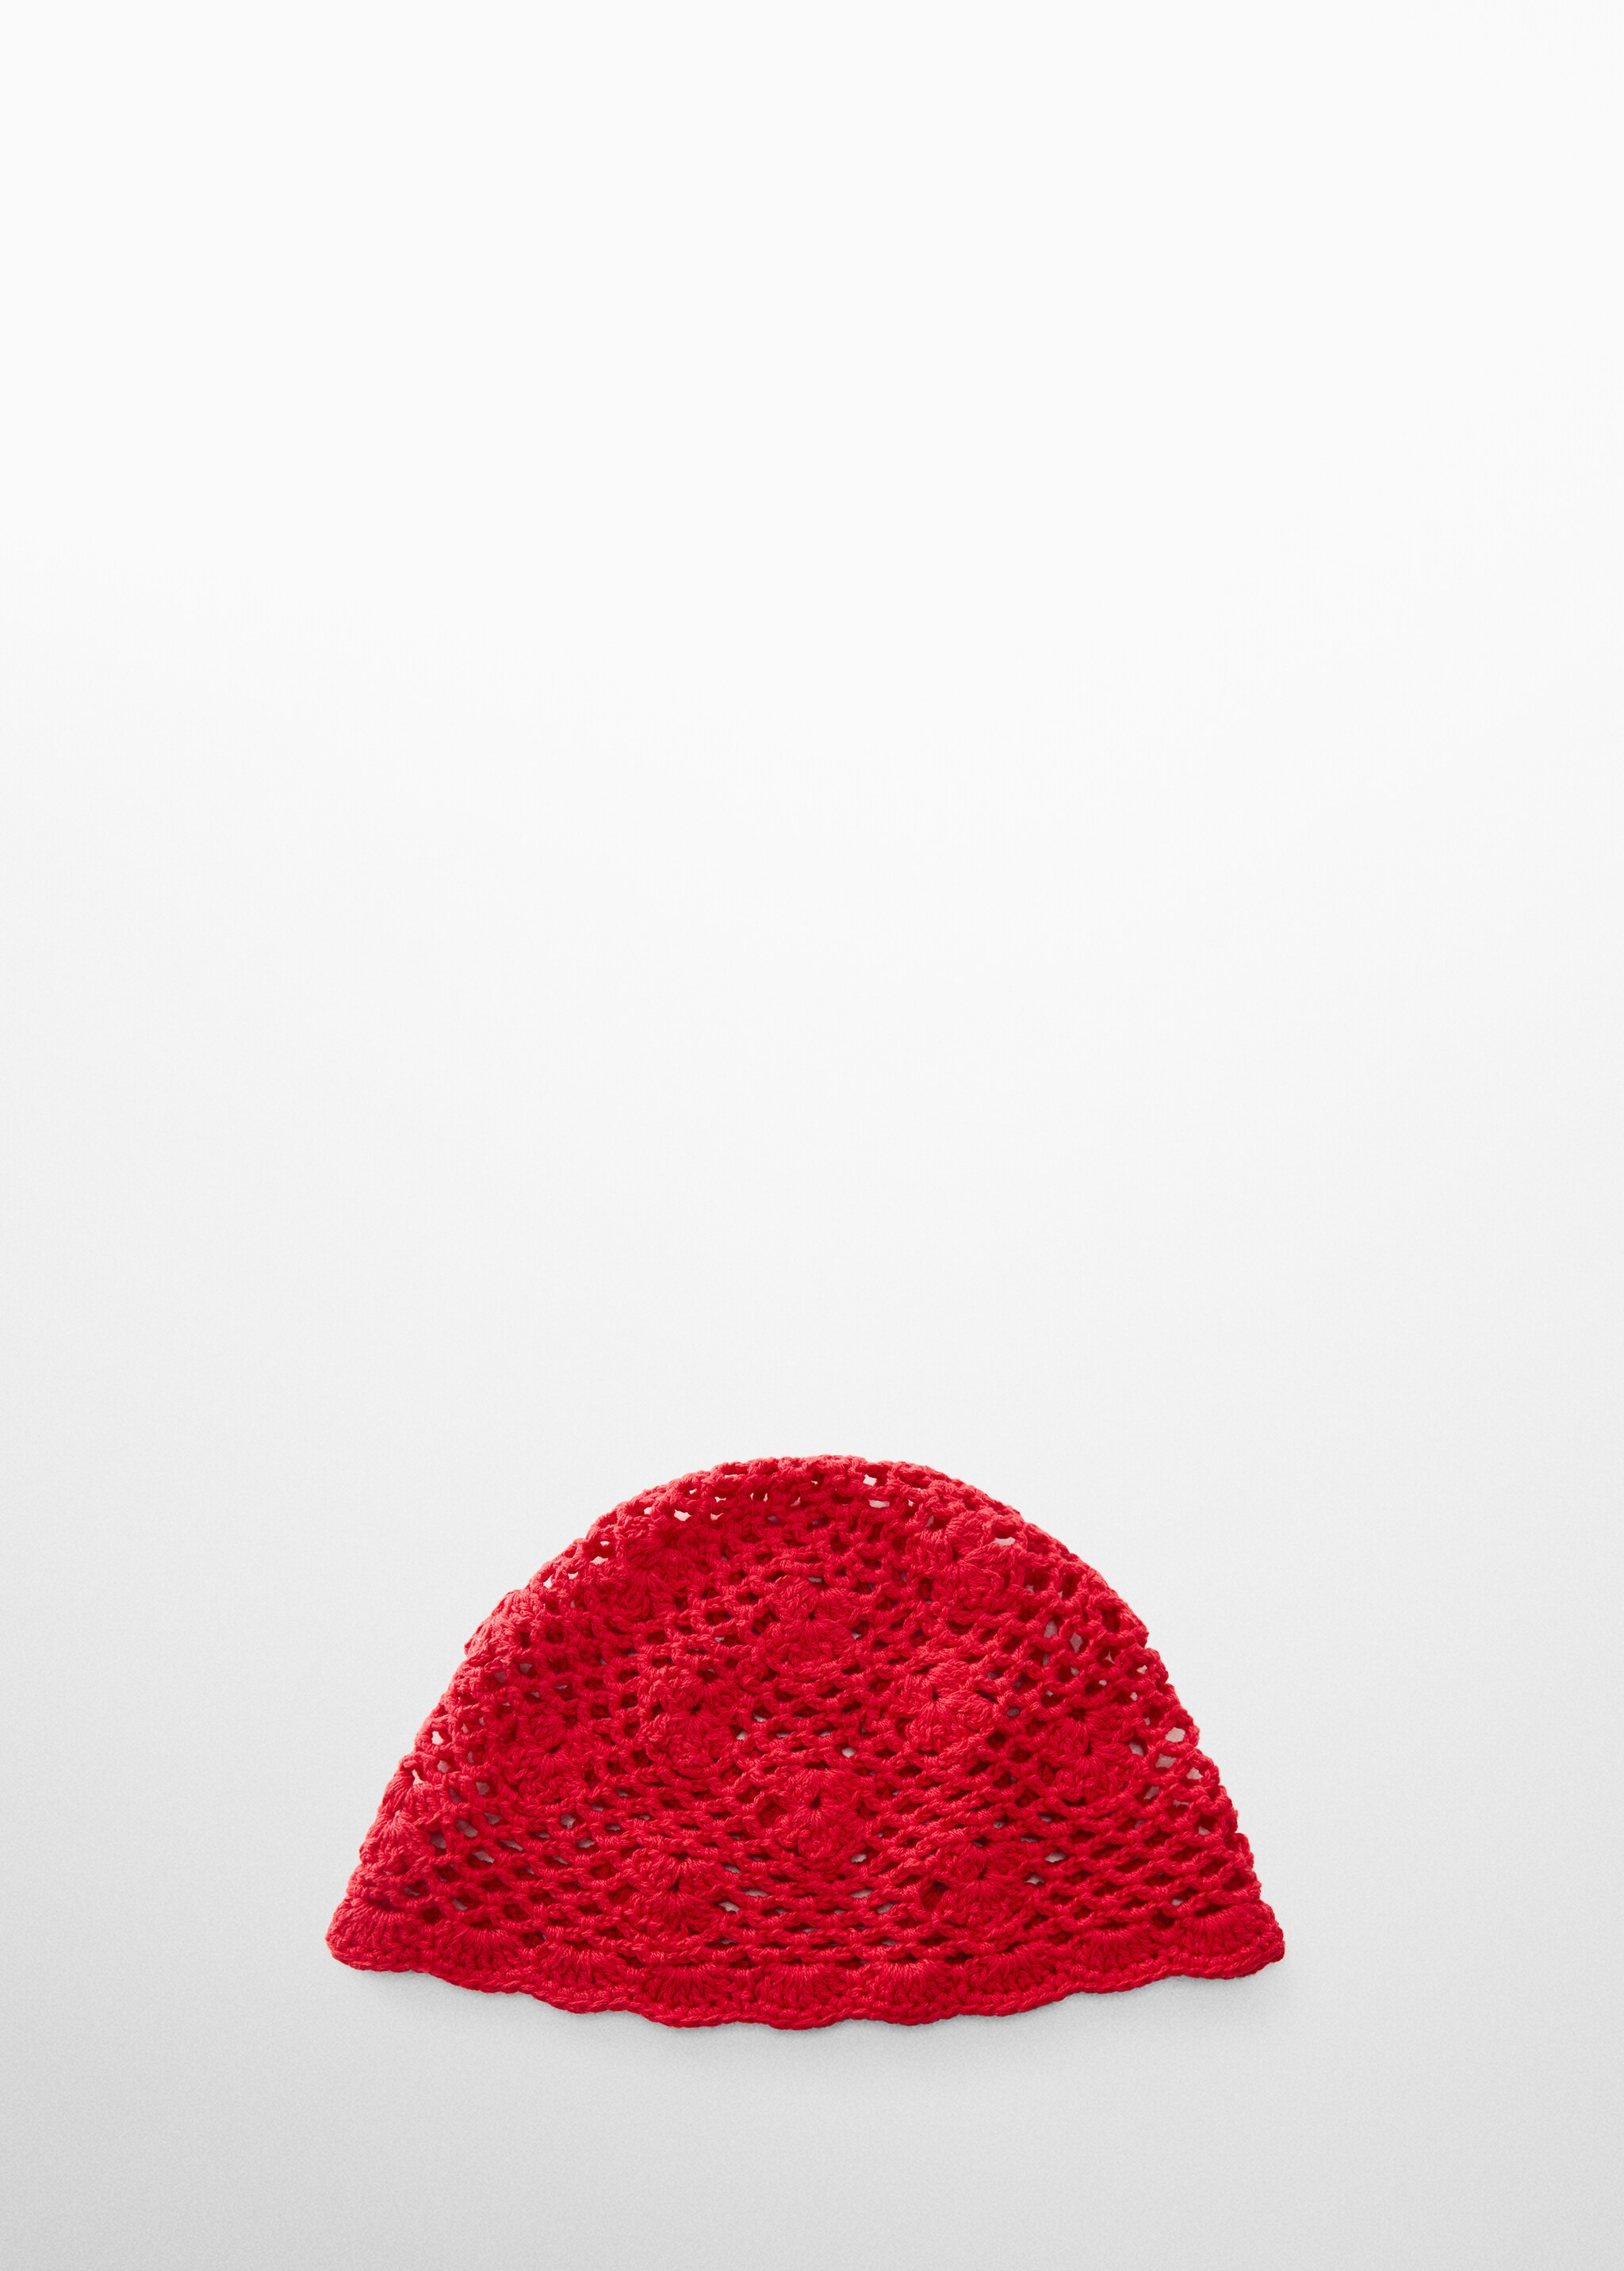 Gorra casquete crochet - Artículo sin modelo